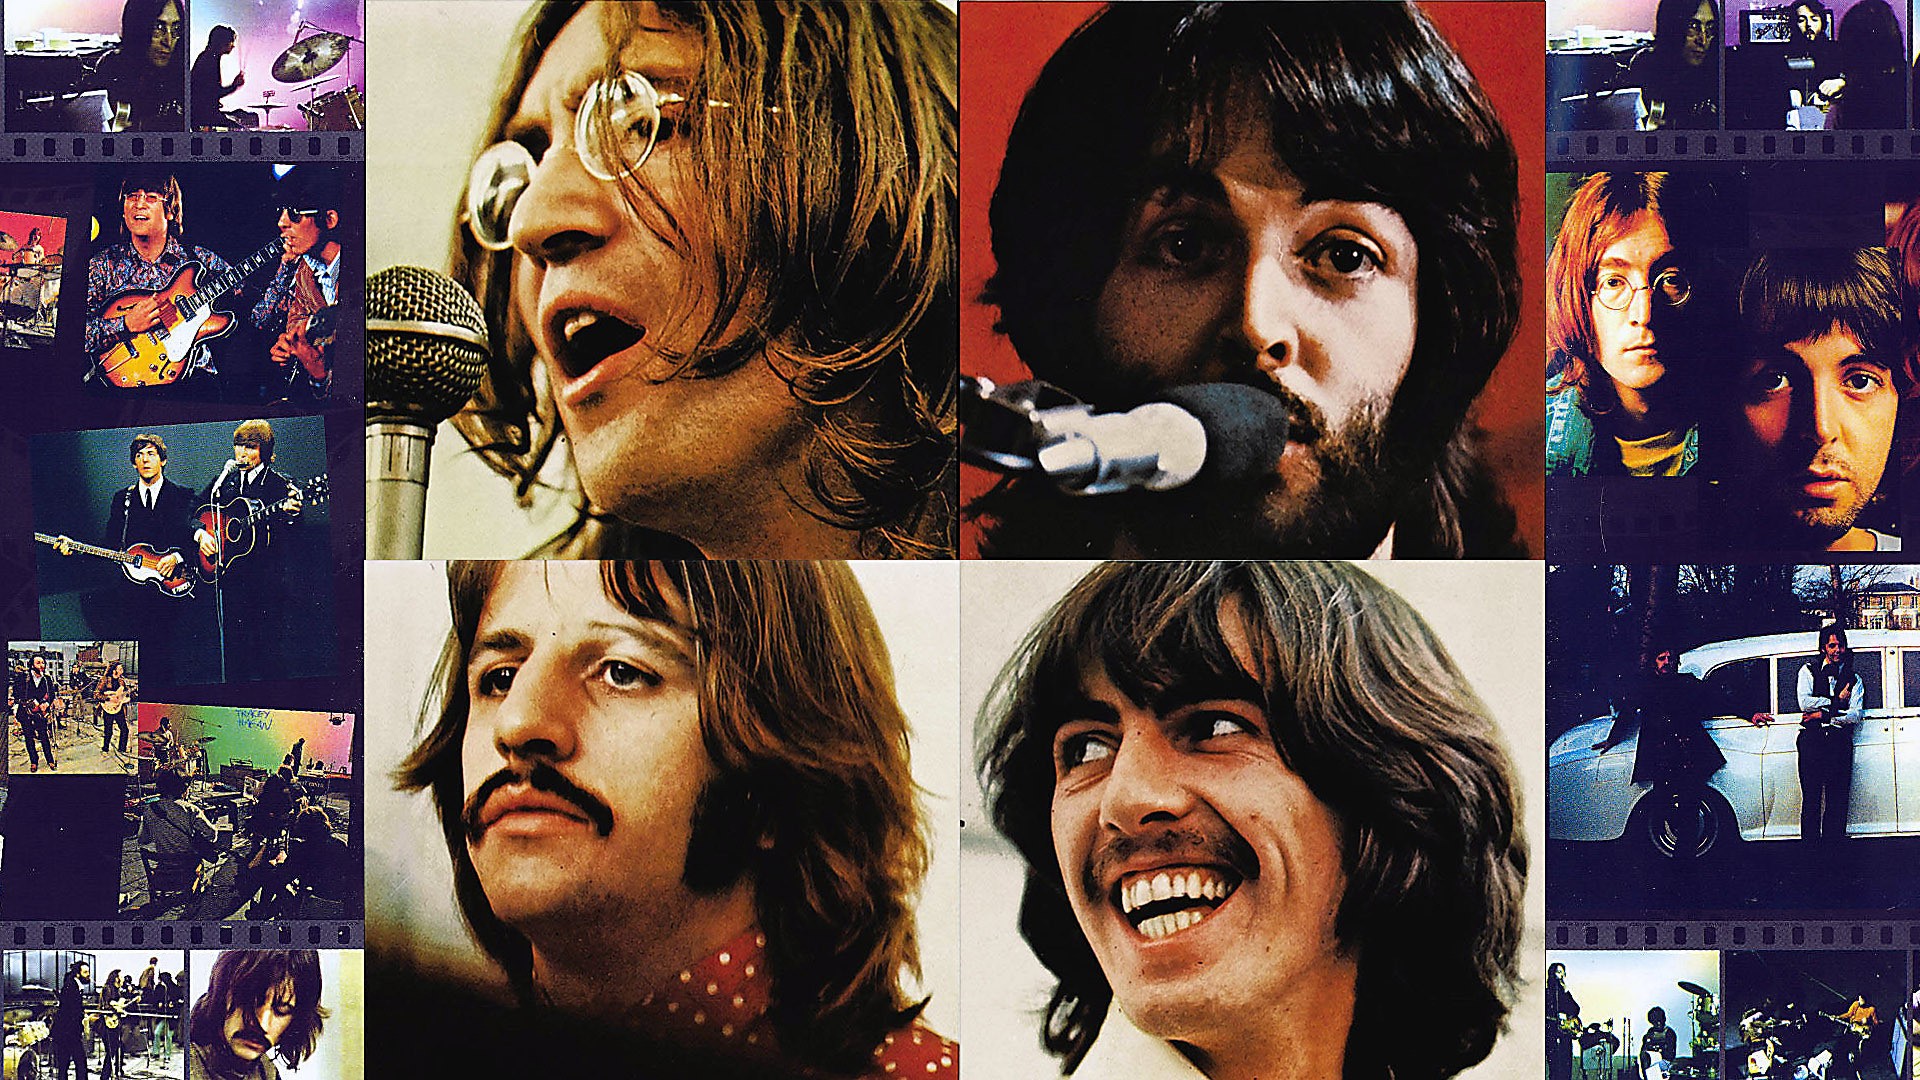 The Beatles HD Wallpaper